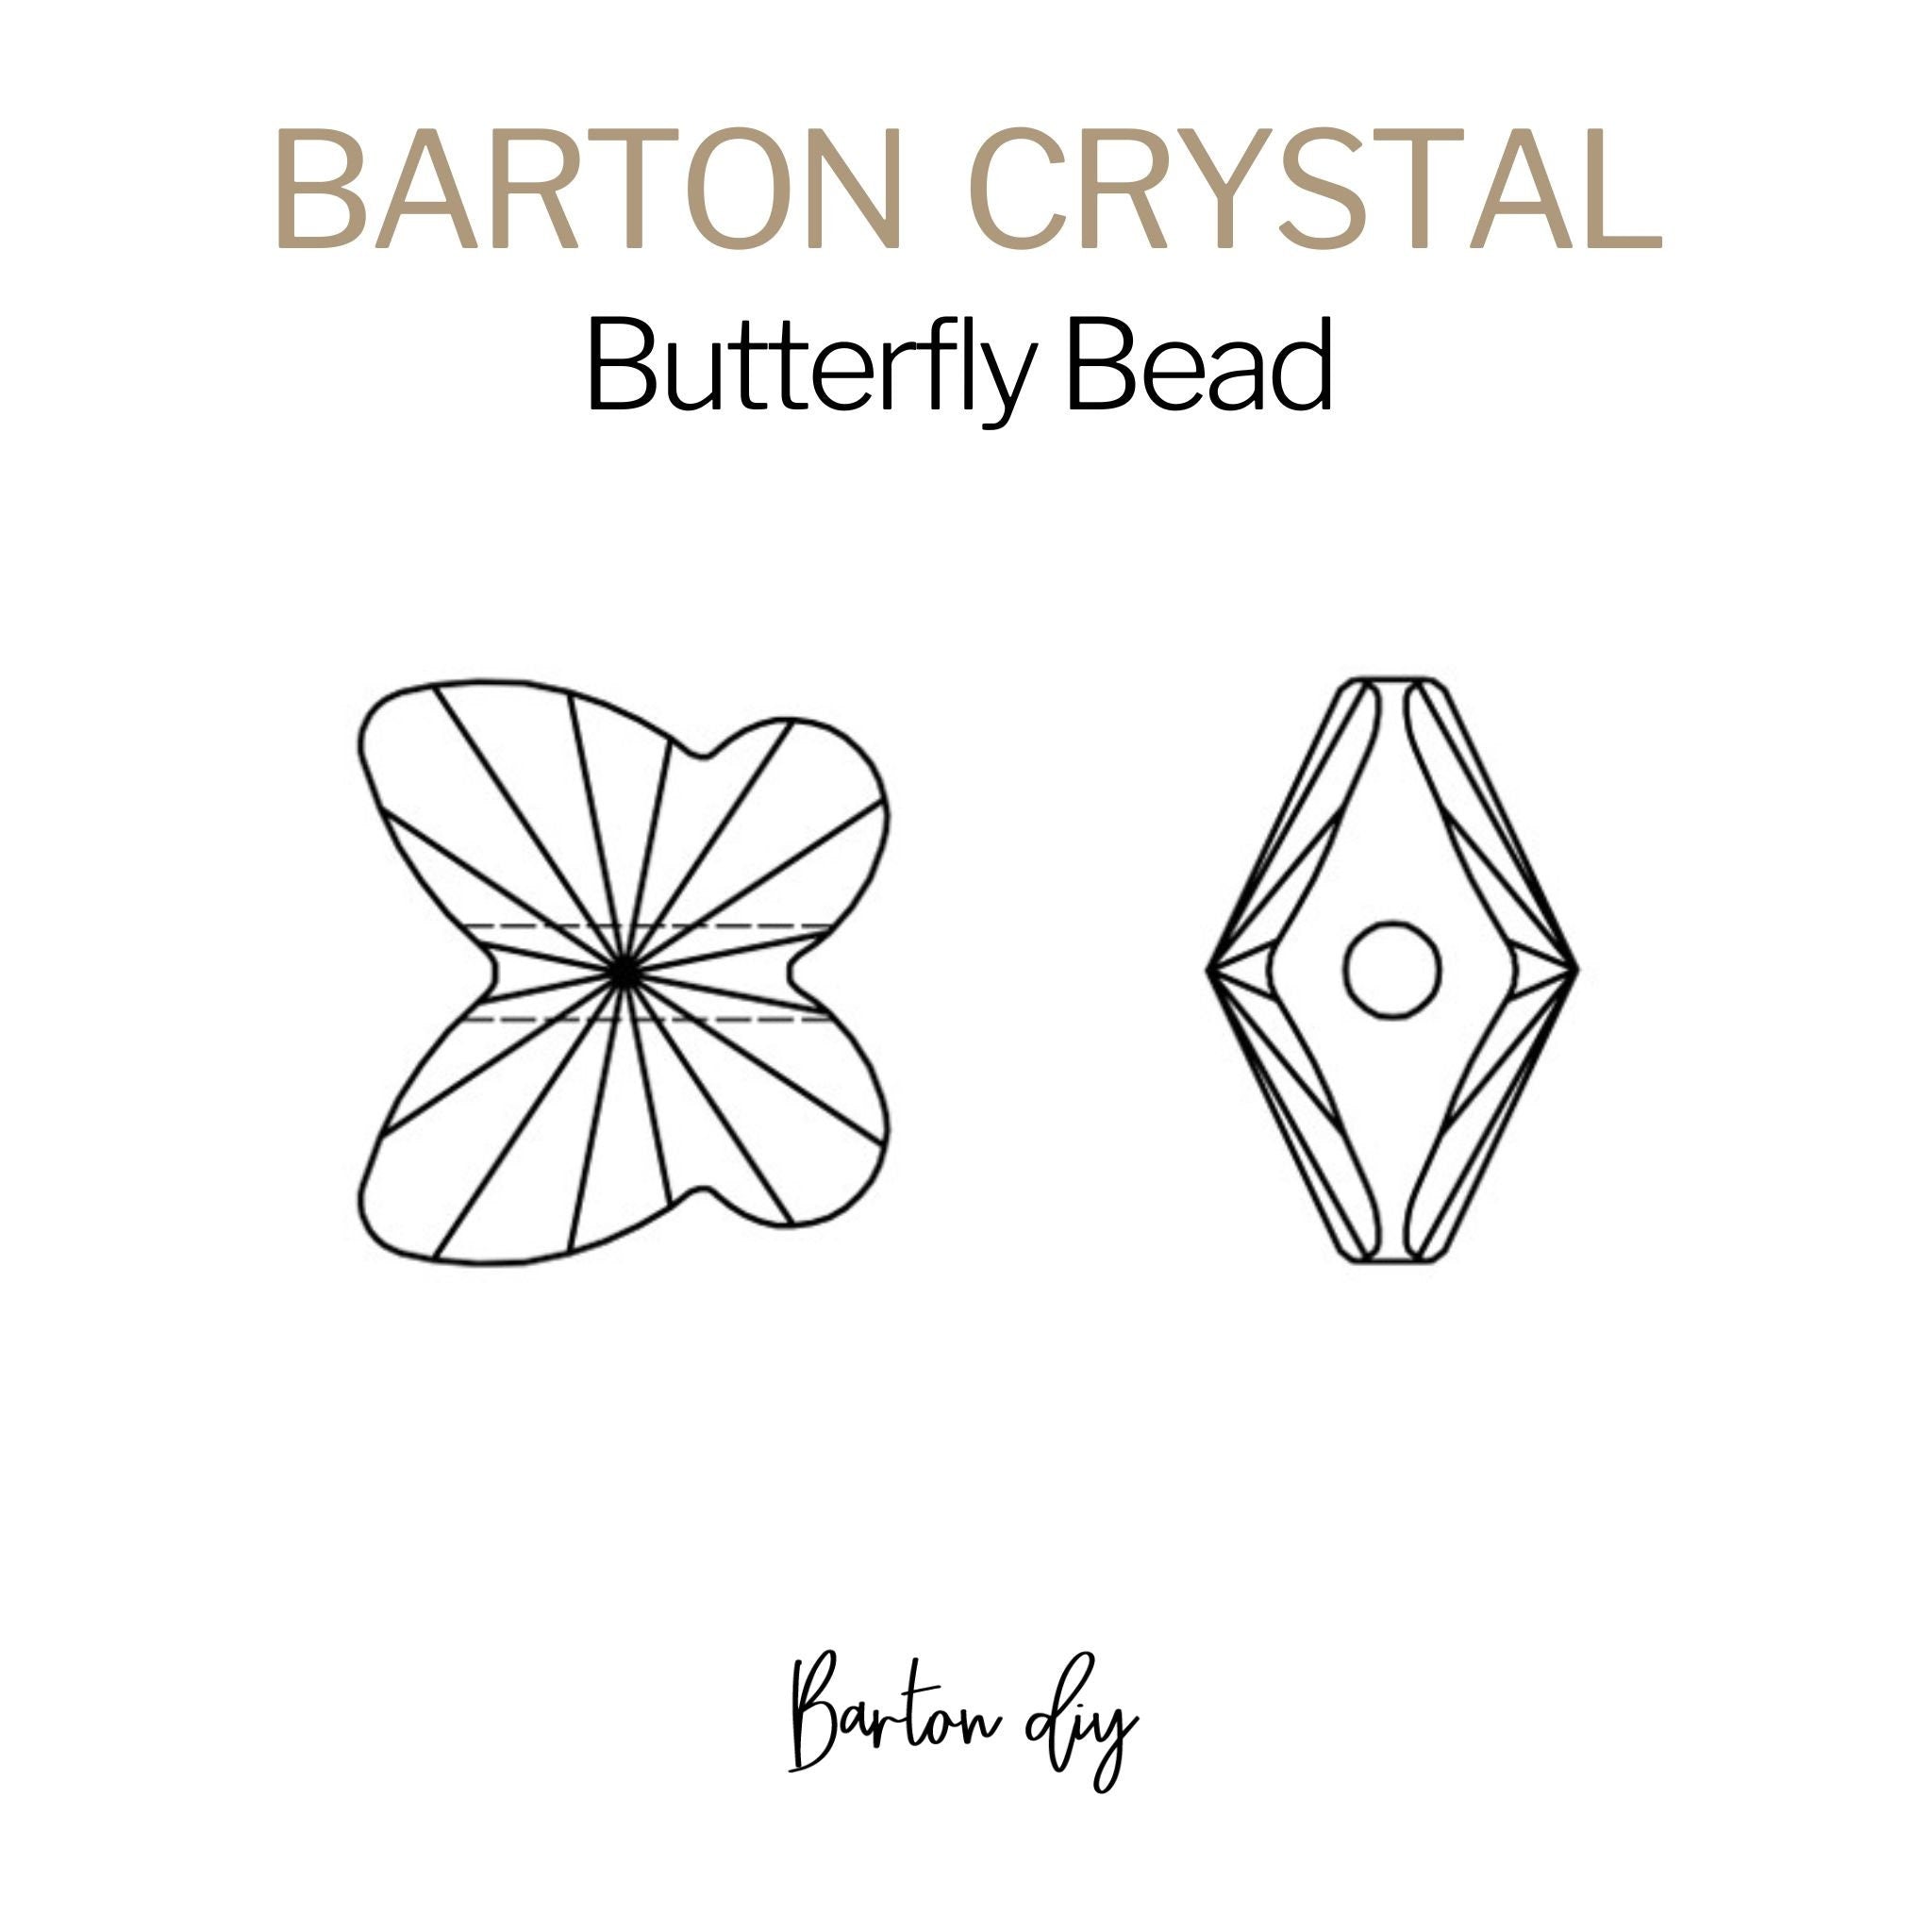 Crystal AB Large Hole Butterfly Bead 5954 Barton Crystal 14mm